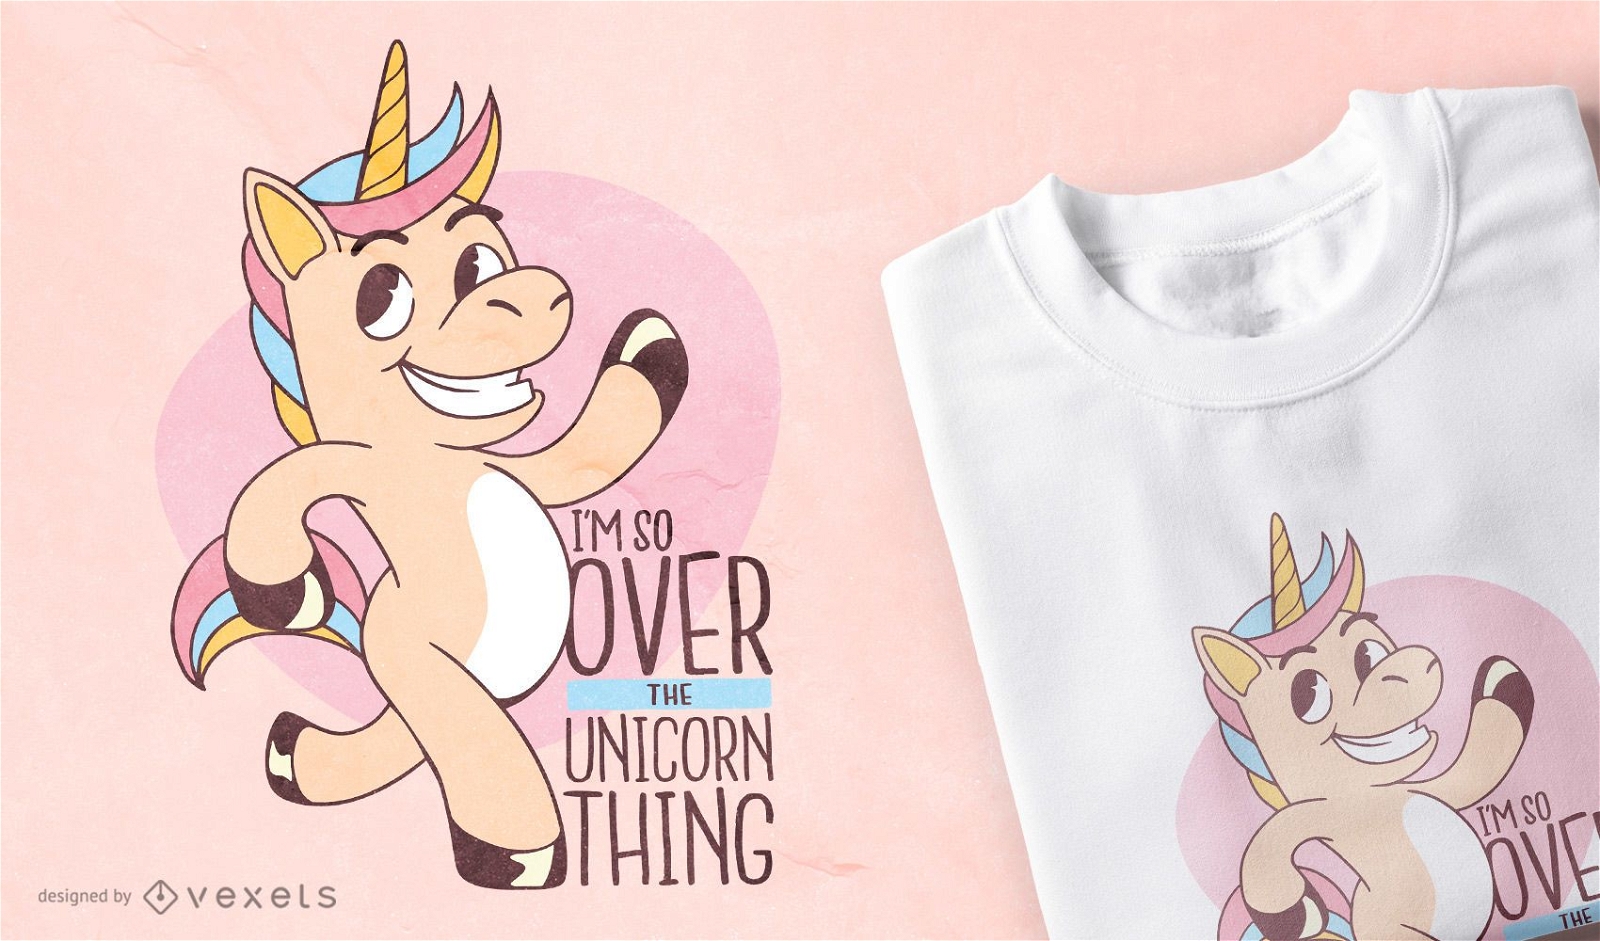 Unicorn funny quote t-shirt design